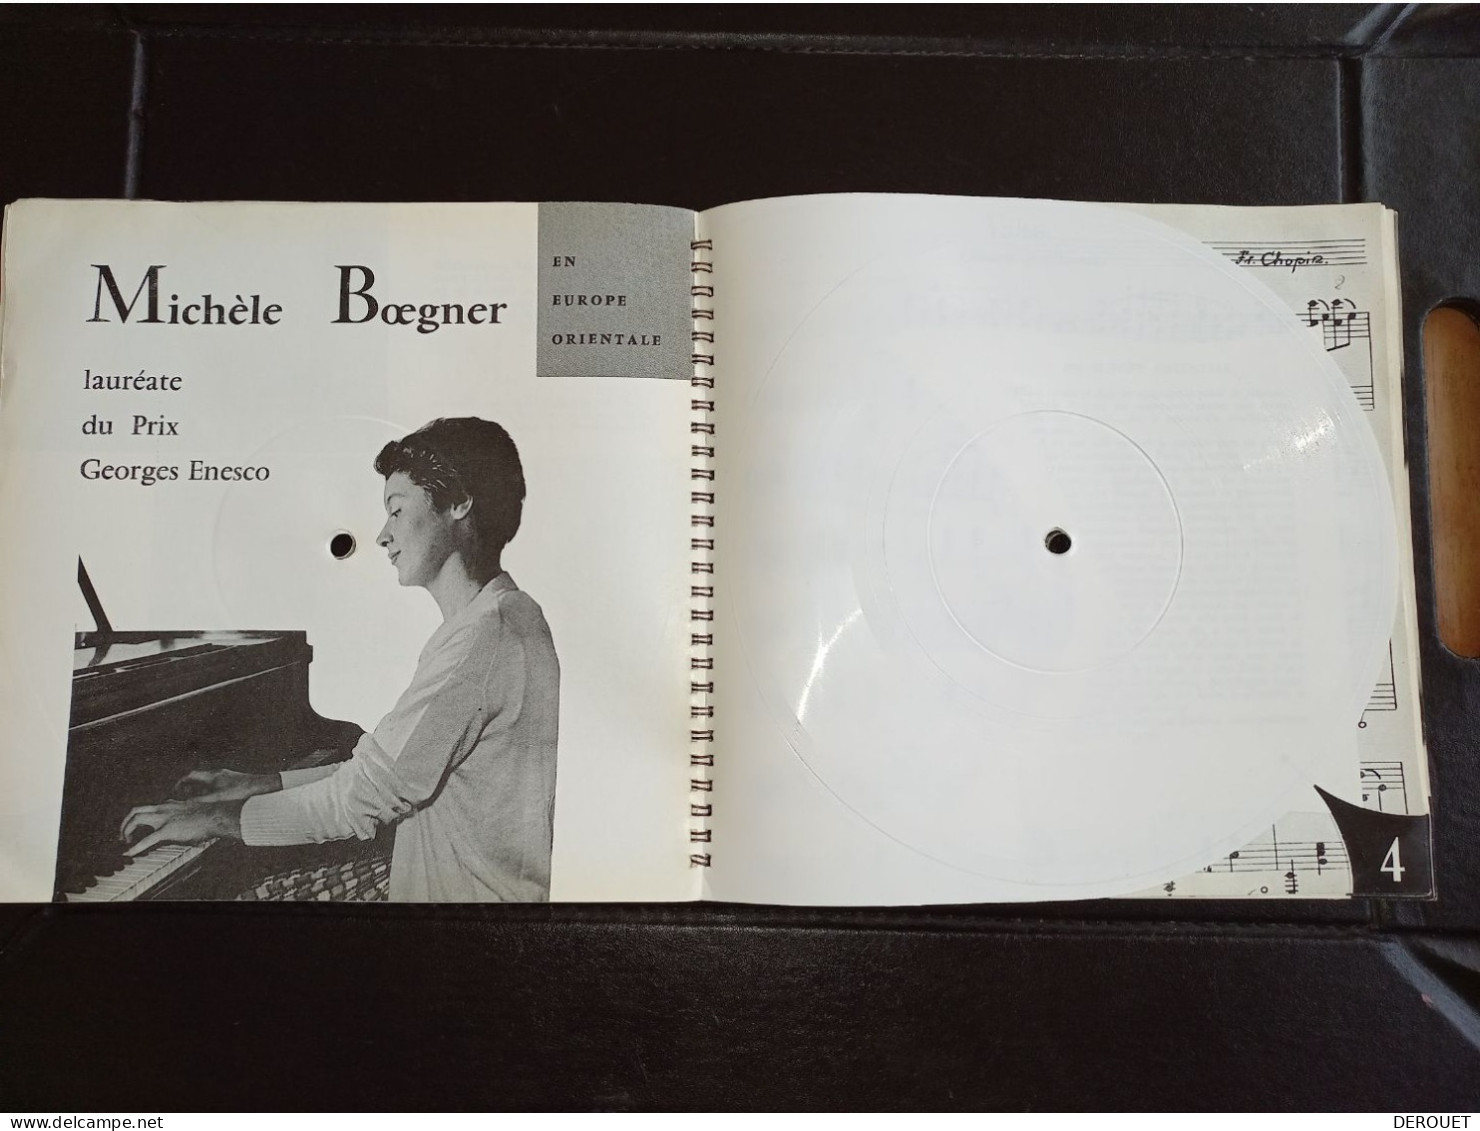 Sonorama N° 2 Novembre 1958 - Le Magazine Sonore De L'actualité - 6 Disques - Speciale Formaten